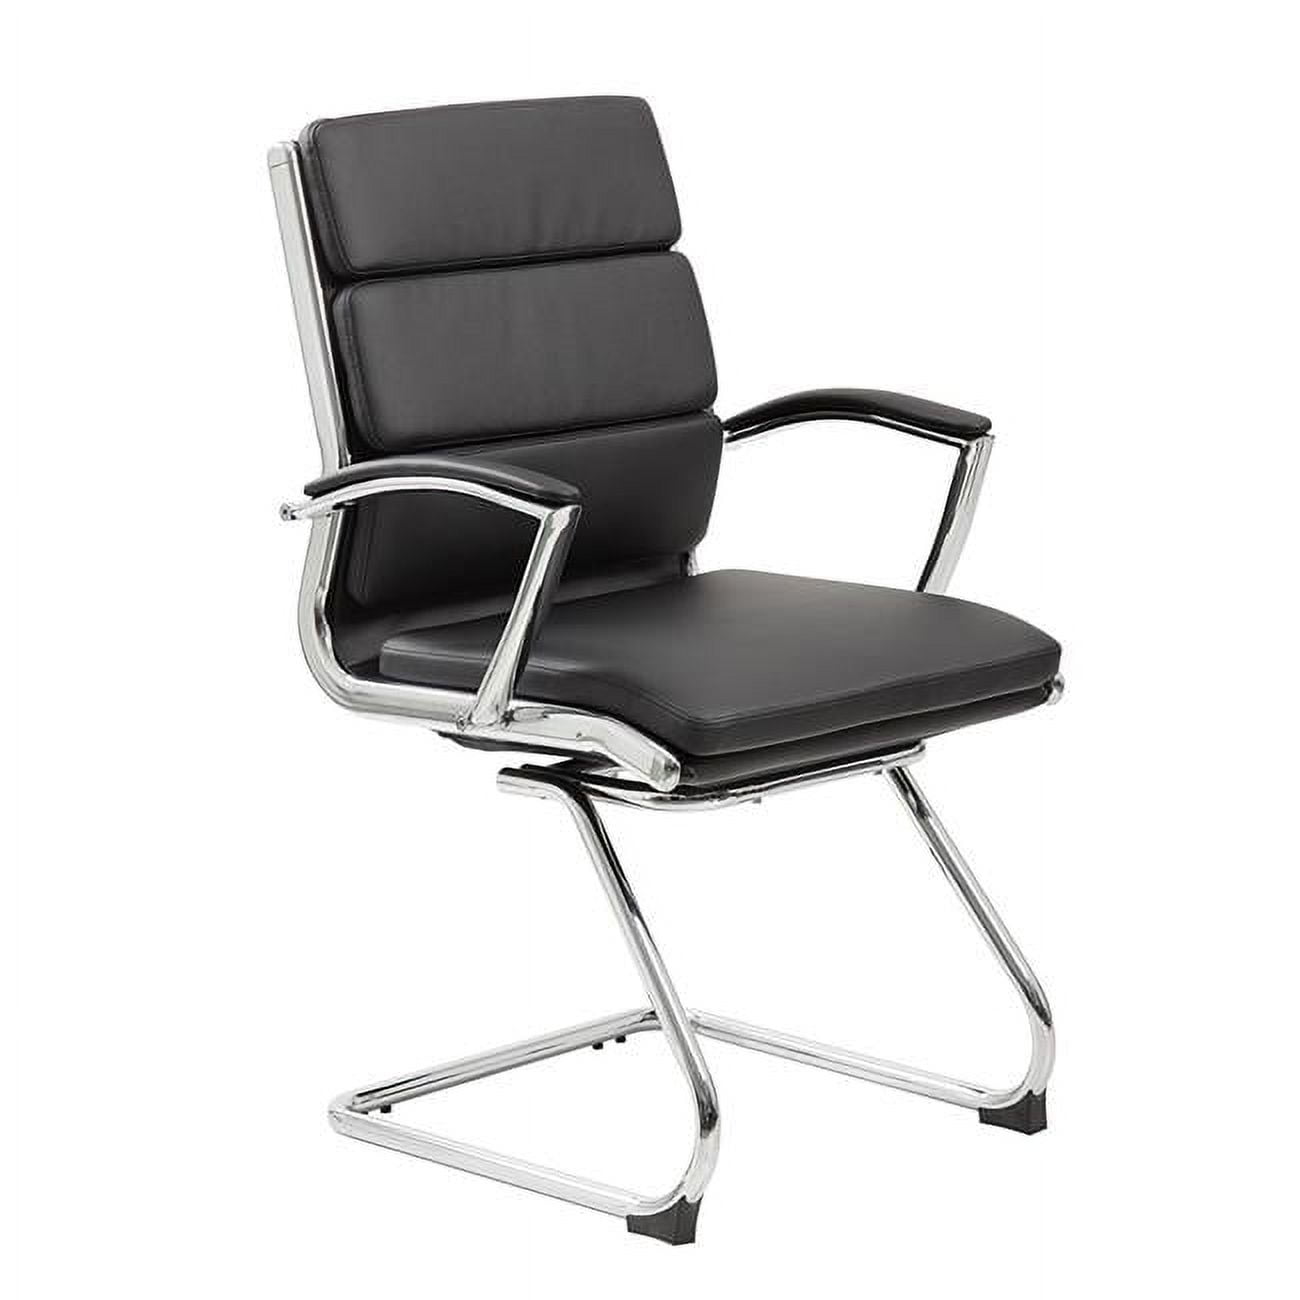 B980BK-SG Classic High Back Chair with Black Base -  Piazza, PI980444